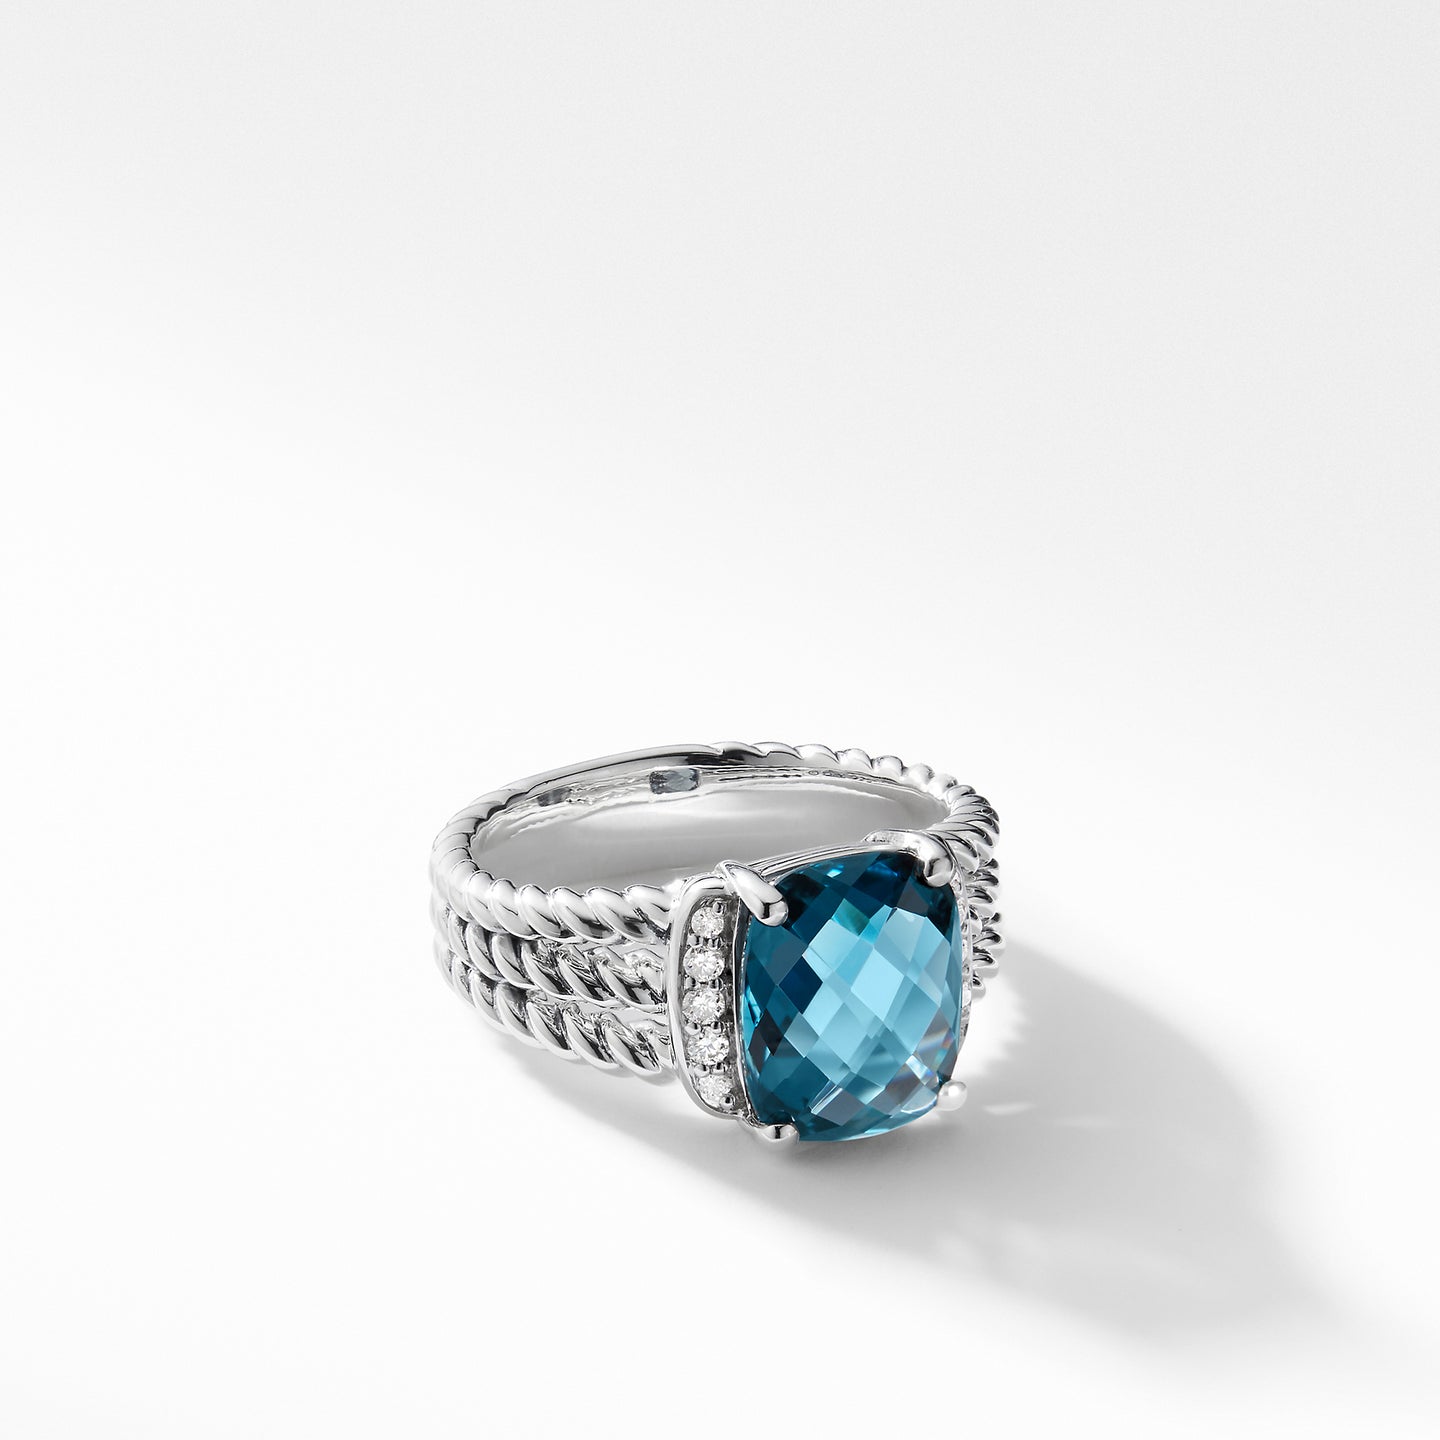 Petite Wheaton Ring with Hampton Blue Topaz and Diamonds, Size 7